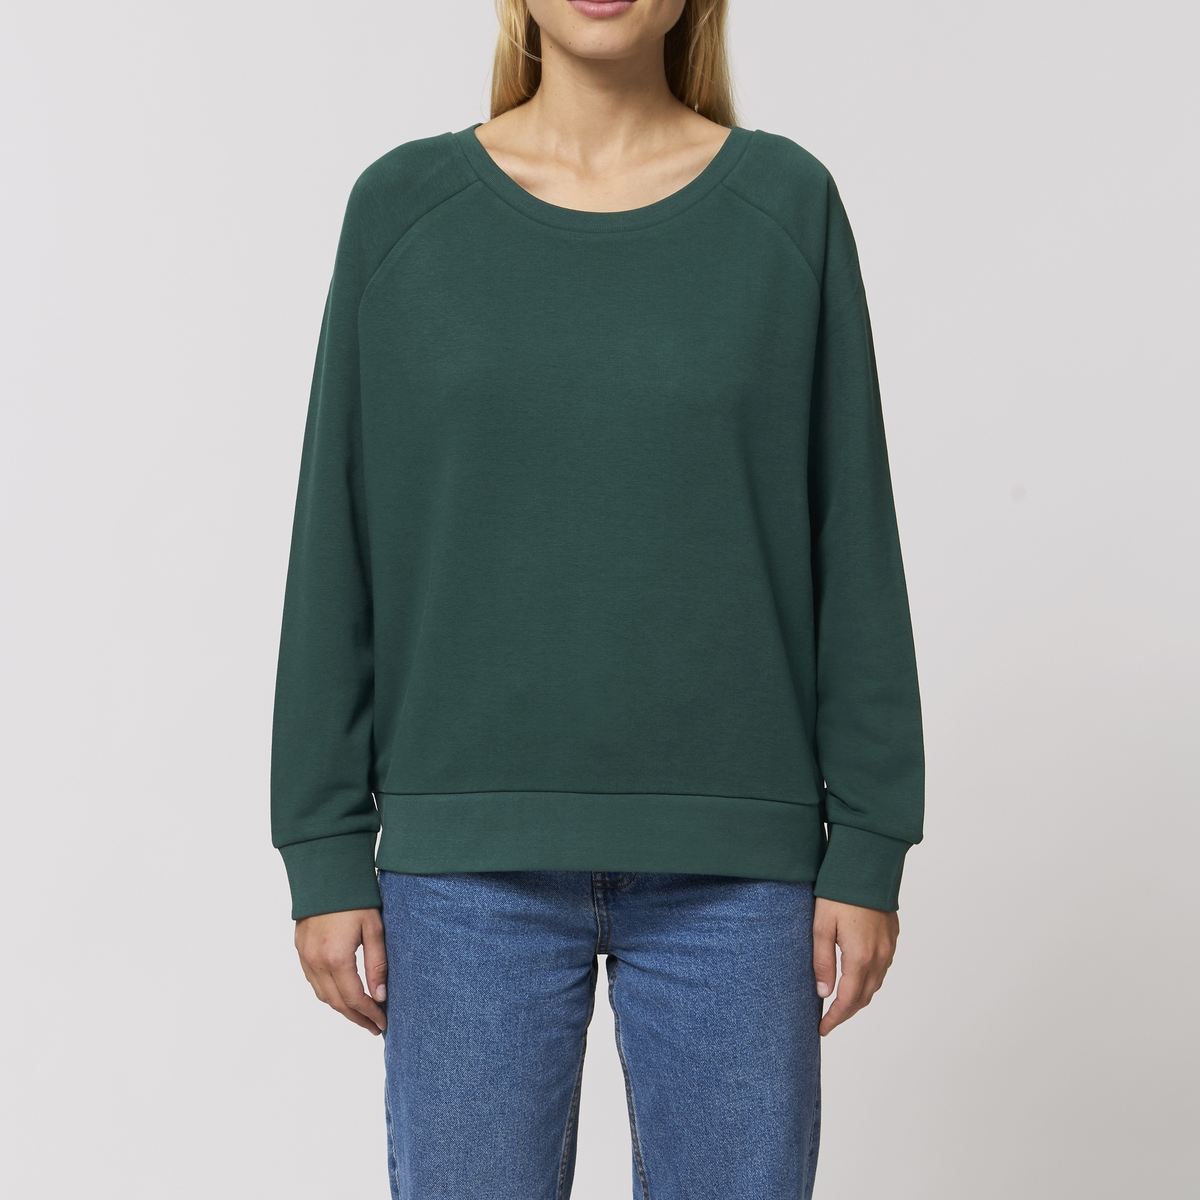 Sweater Modell: Dash